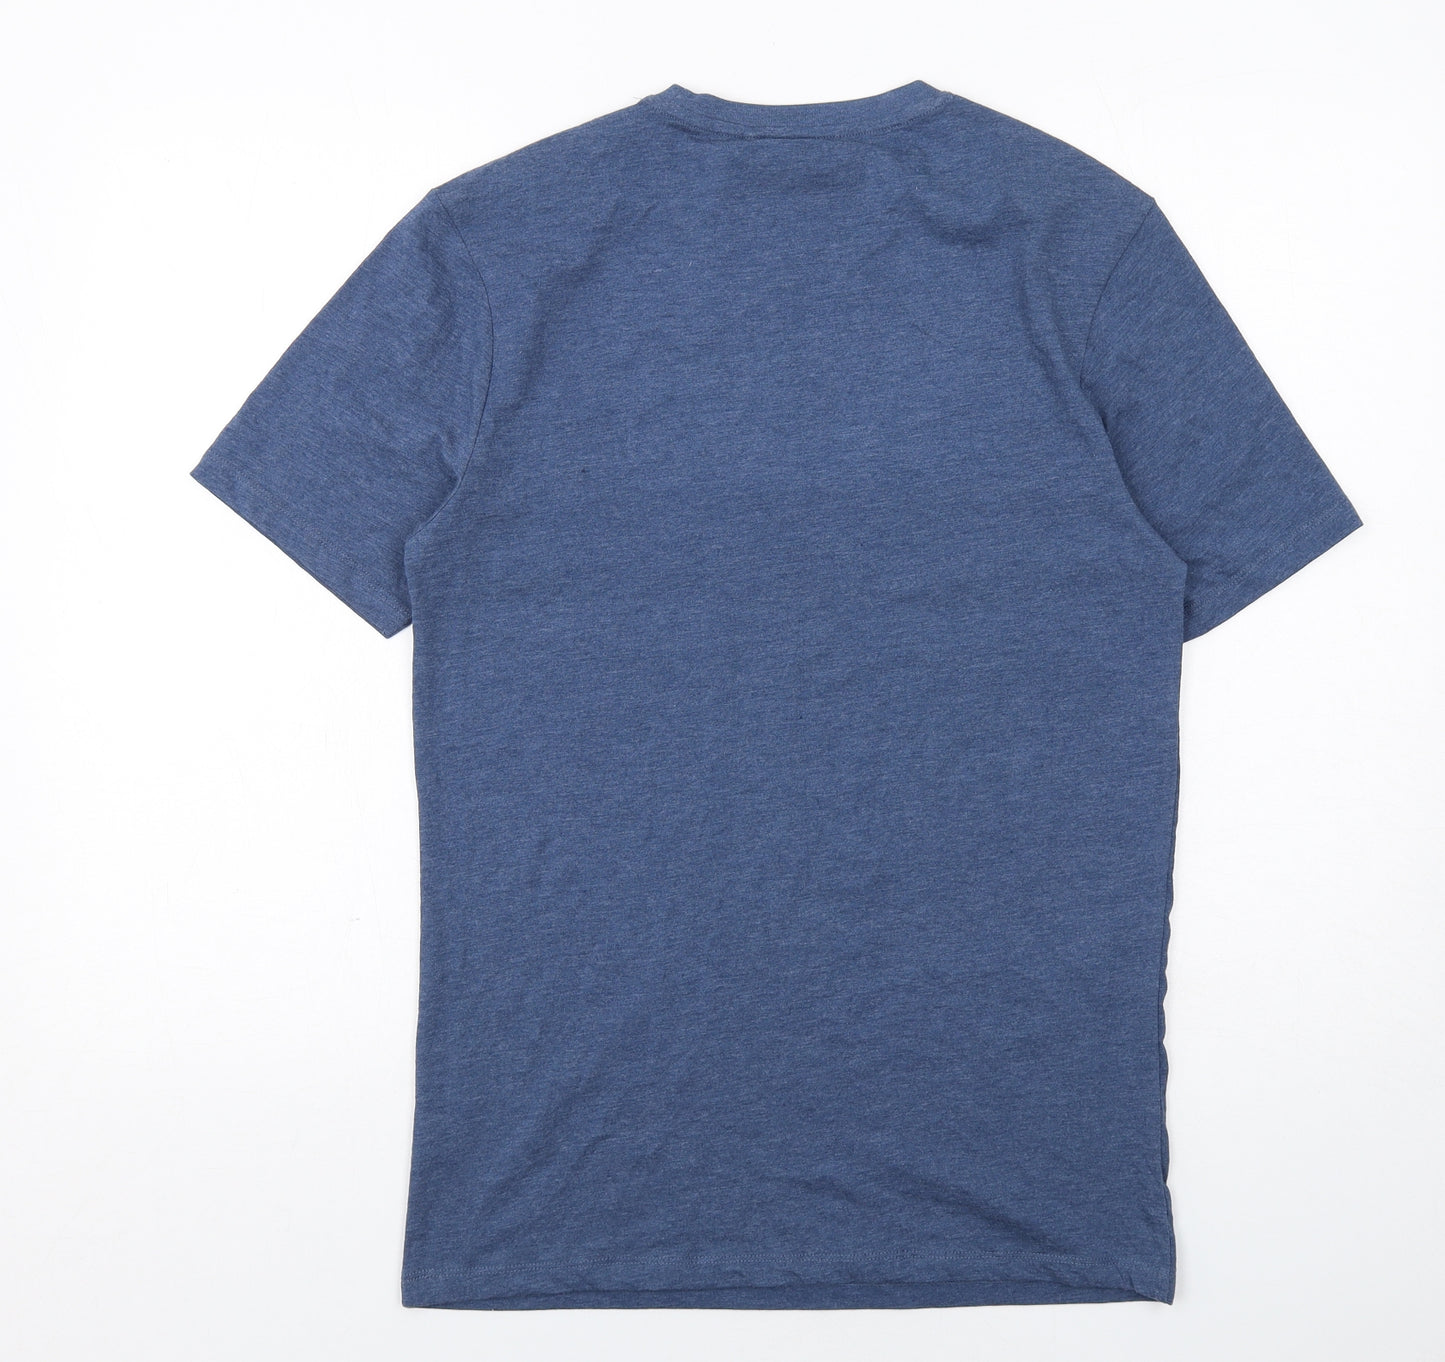 Marvel Mens Blue Cotton T-Shirt Size S Round Neck